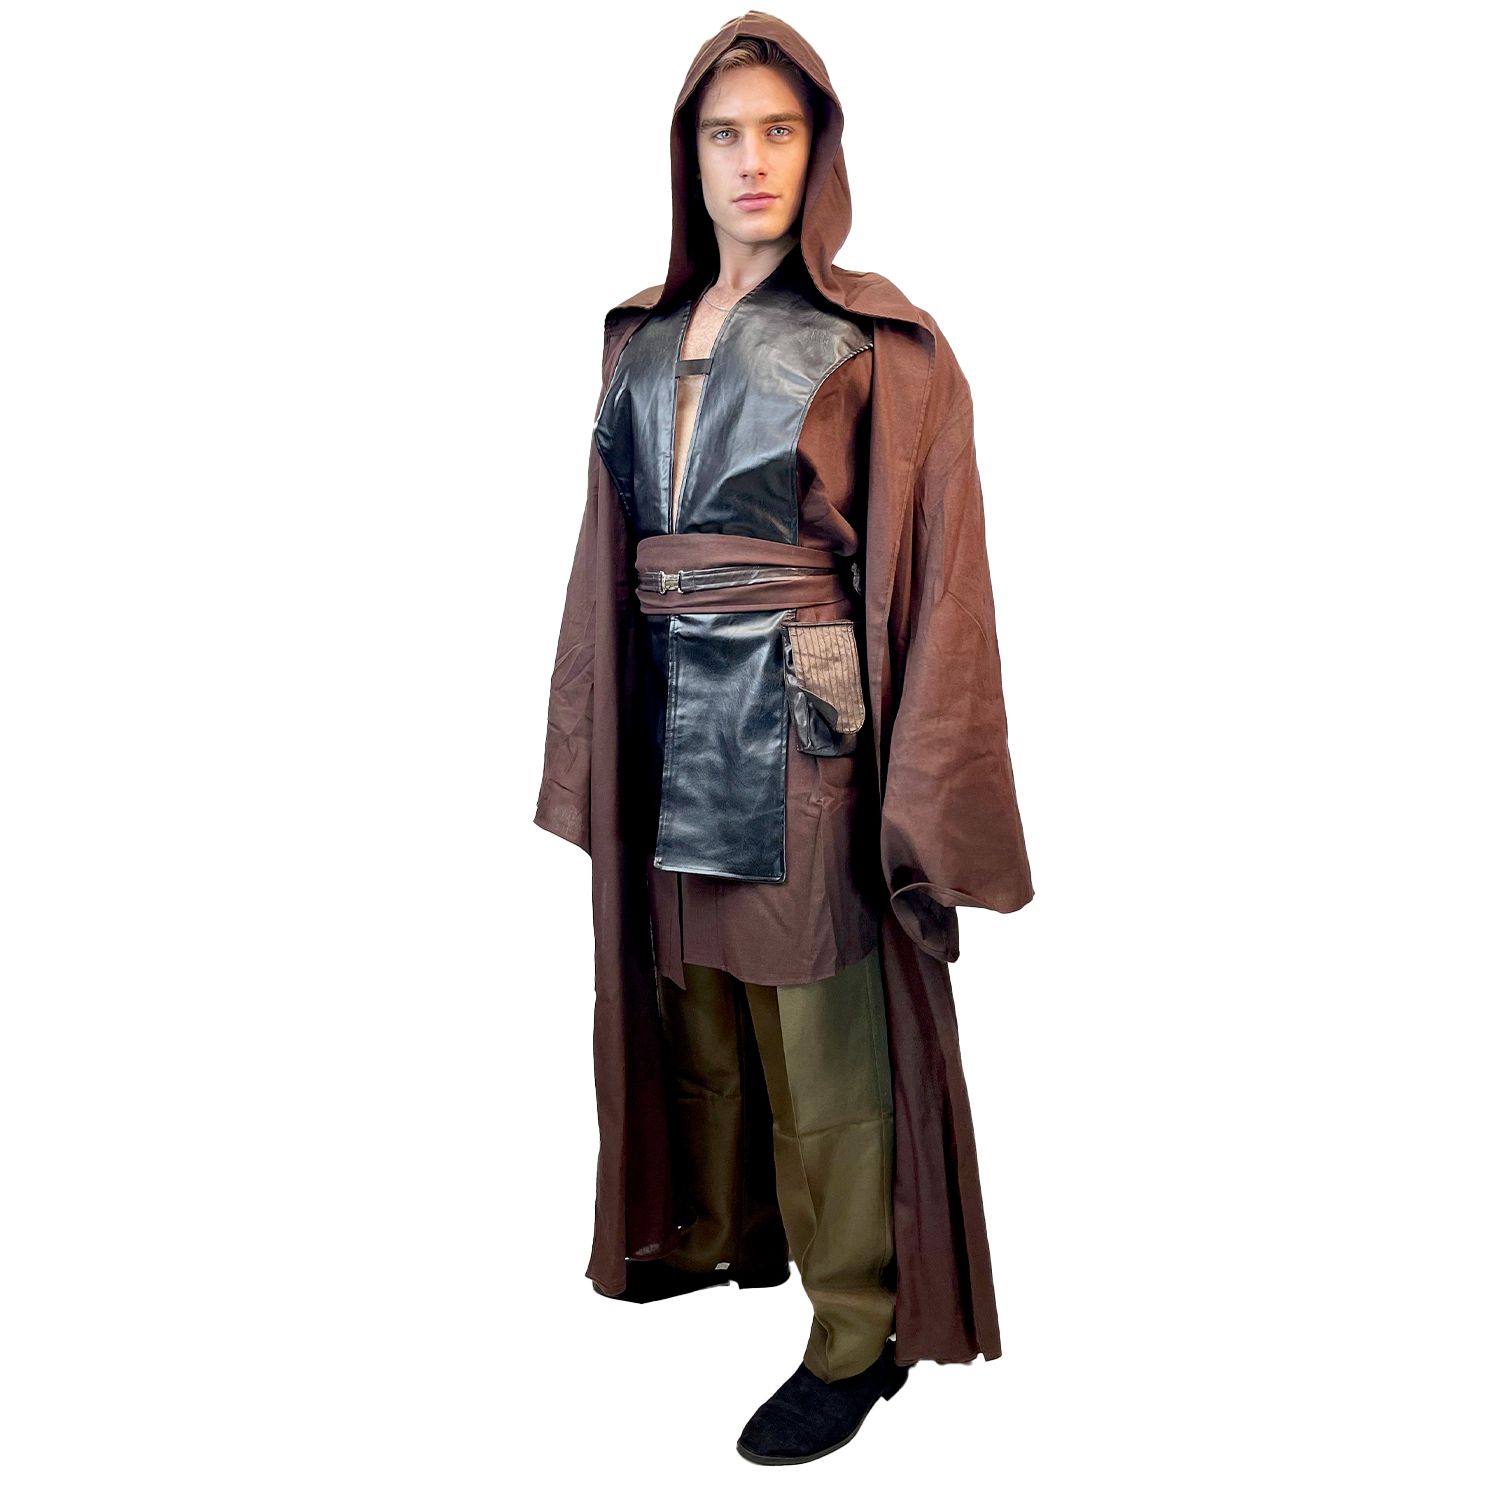 Anakin Skywalker Professional Cosplay Adult Costume